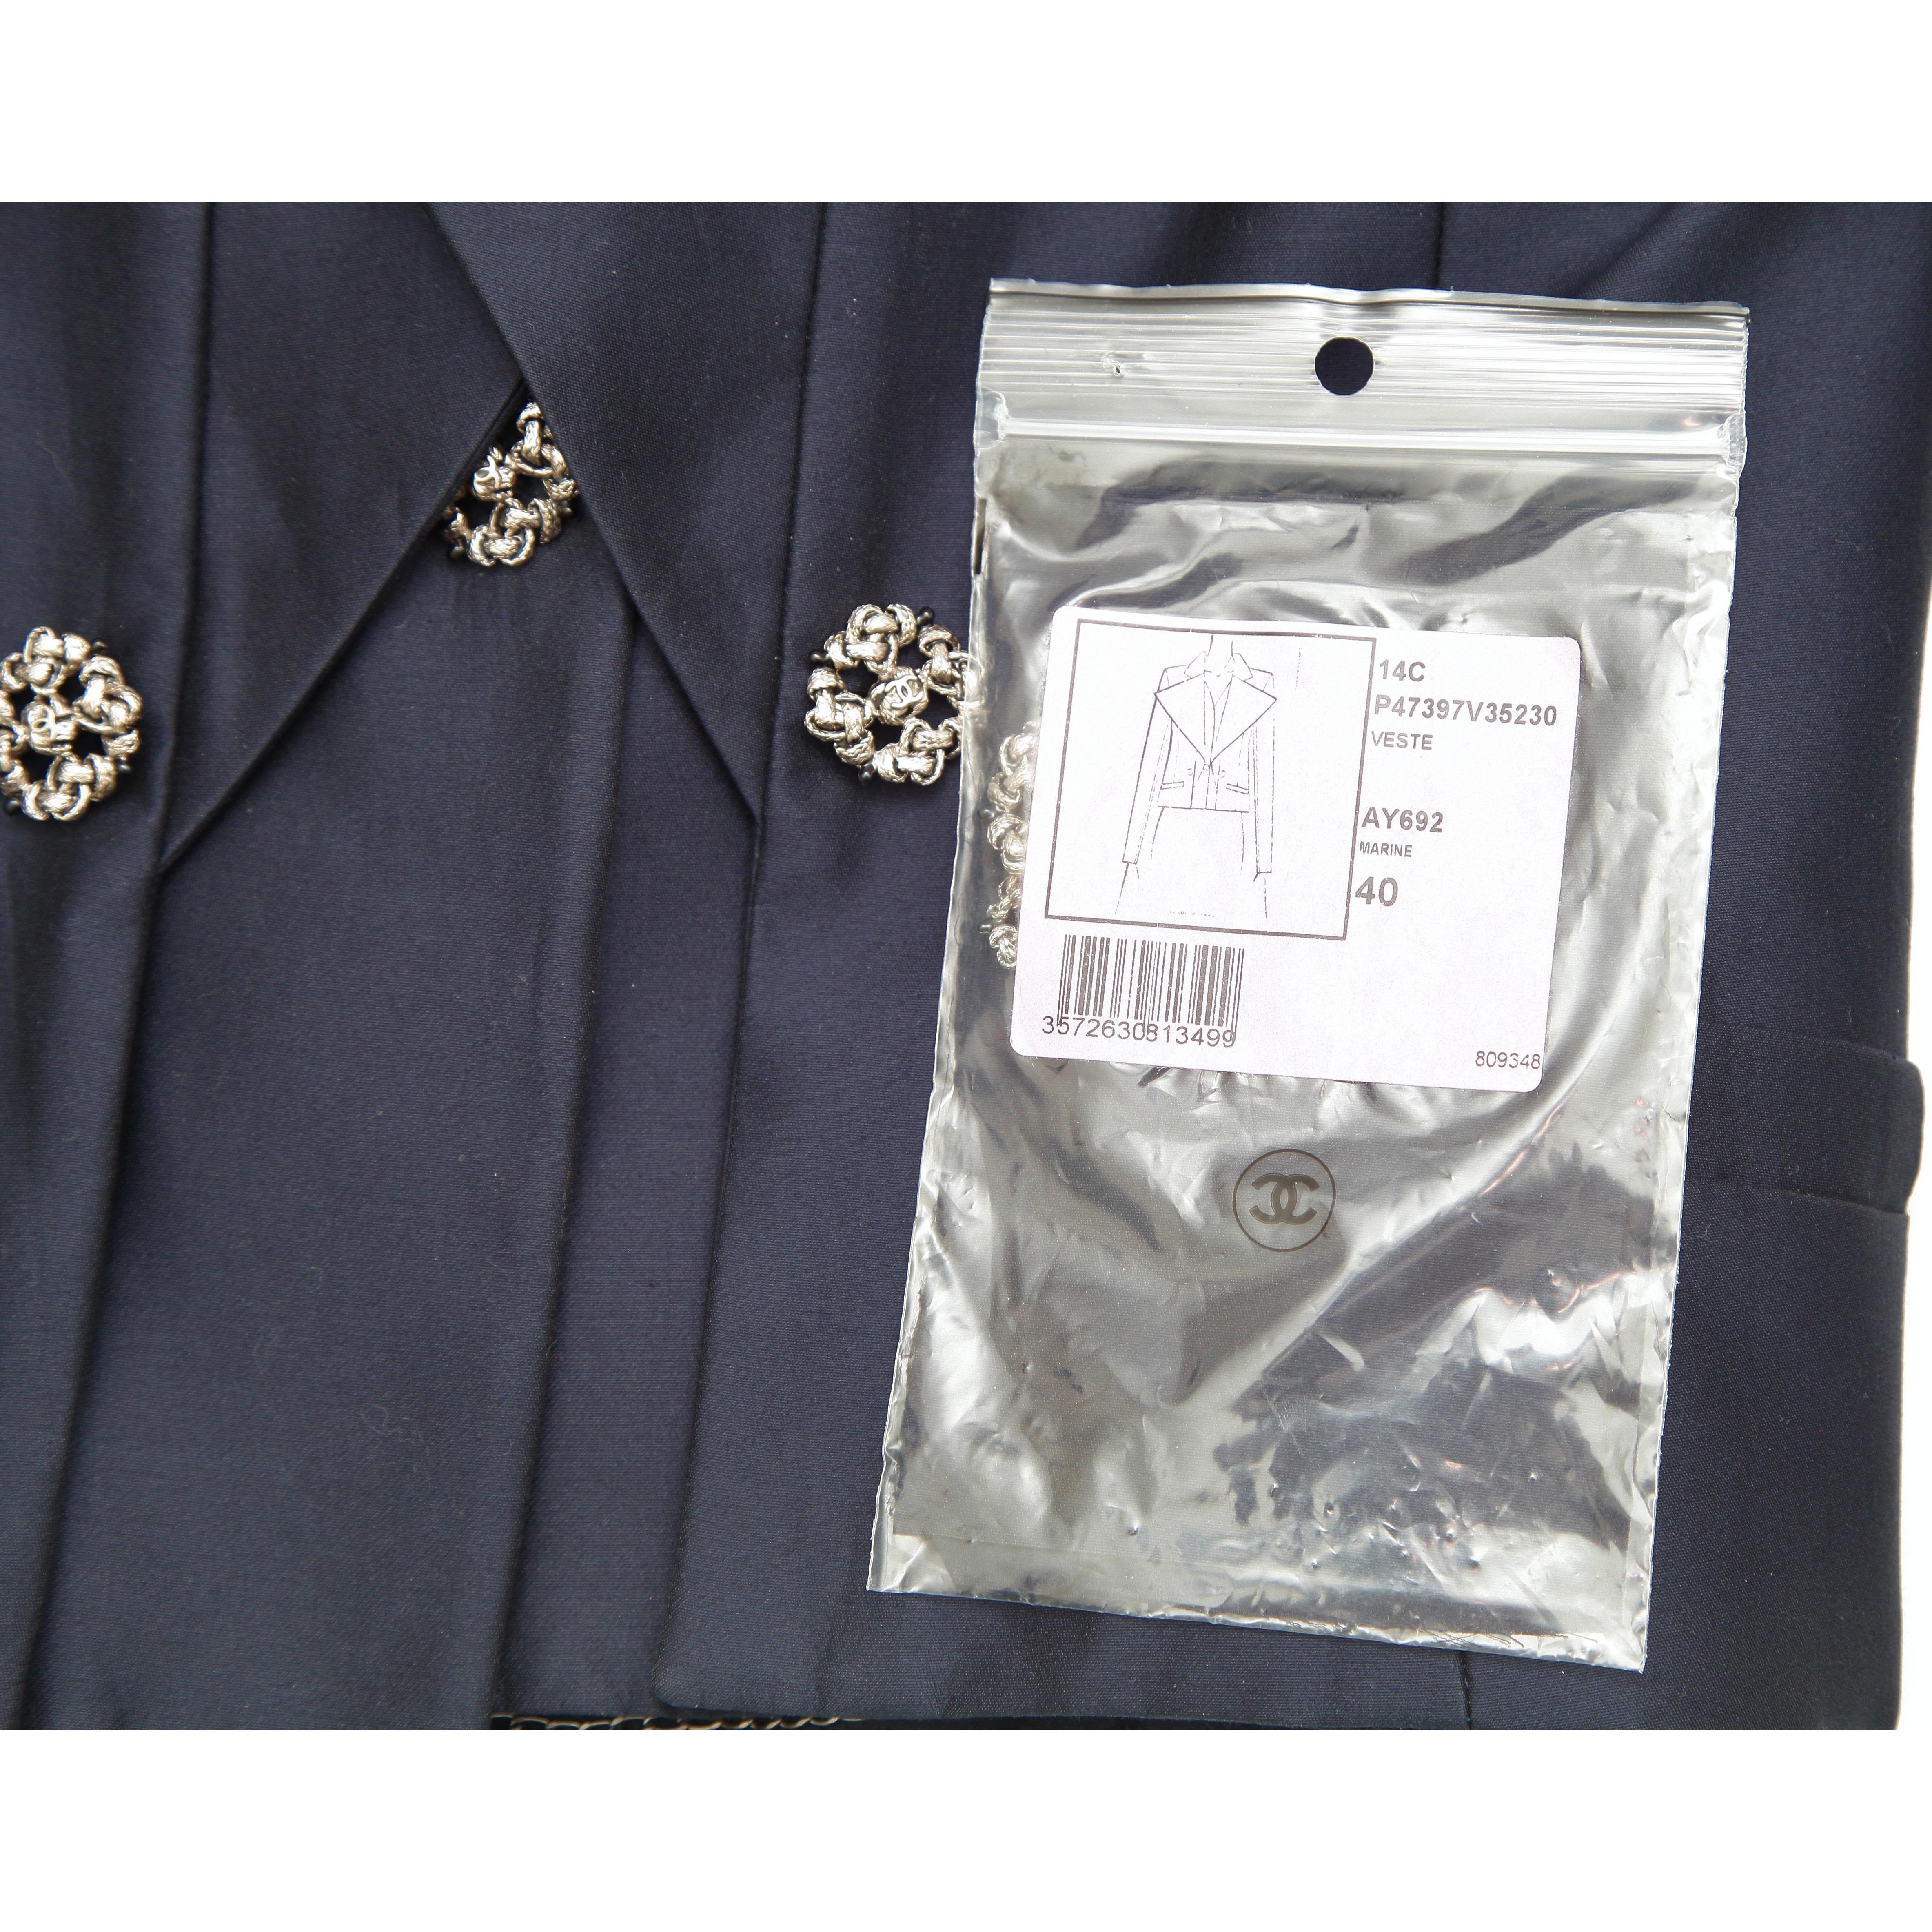 CHANEL Jacke Blazer Mantel Marineblau Silber Kette Langarm Gr. 40 2014 14C im Angebot 8